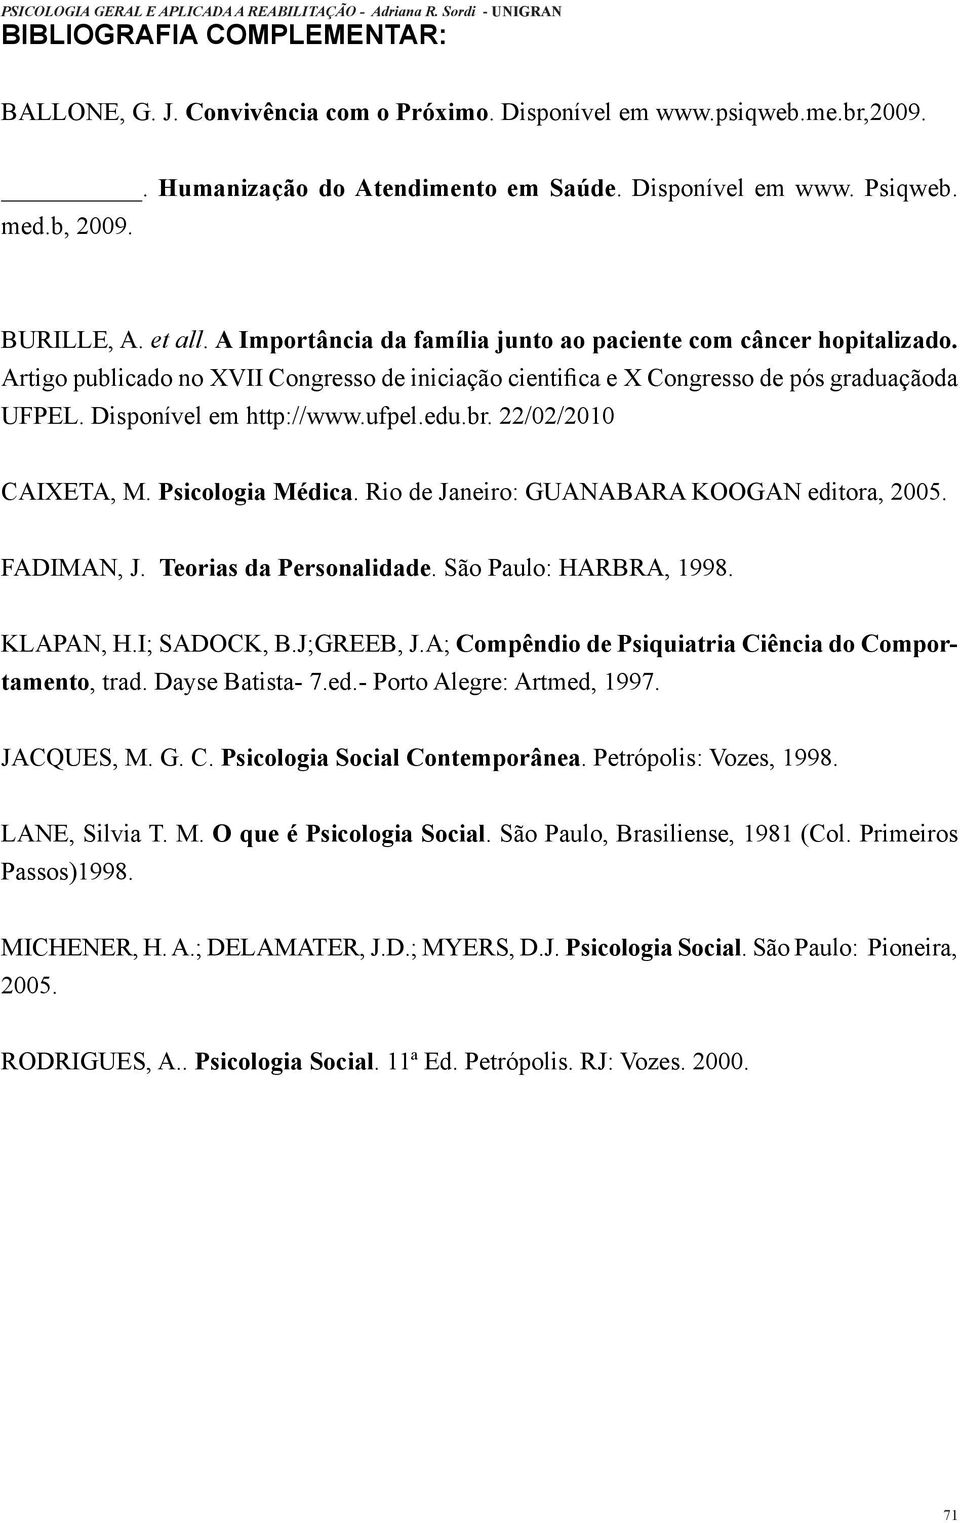 ufpel.edu.br. 22/02/2010 CAIXETA, M. Psicologia Médica. Rio de Janeiro: GUANABARA KOOGAN editora, 2005. FADIMAN, J. Teorias da Personalidade. São Paulo: HARBRA, 1998. KLAPAN, H.I; SADOCK, B.